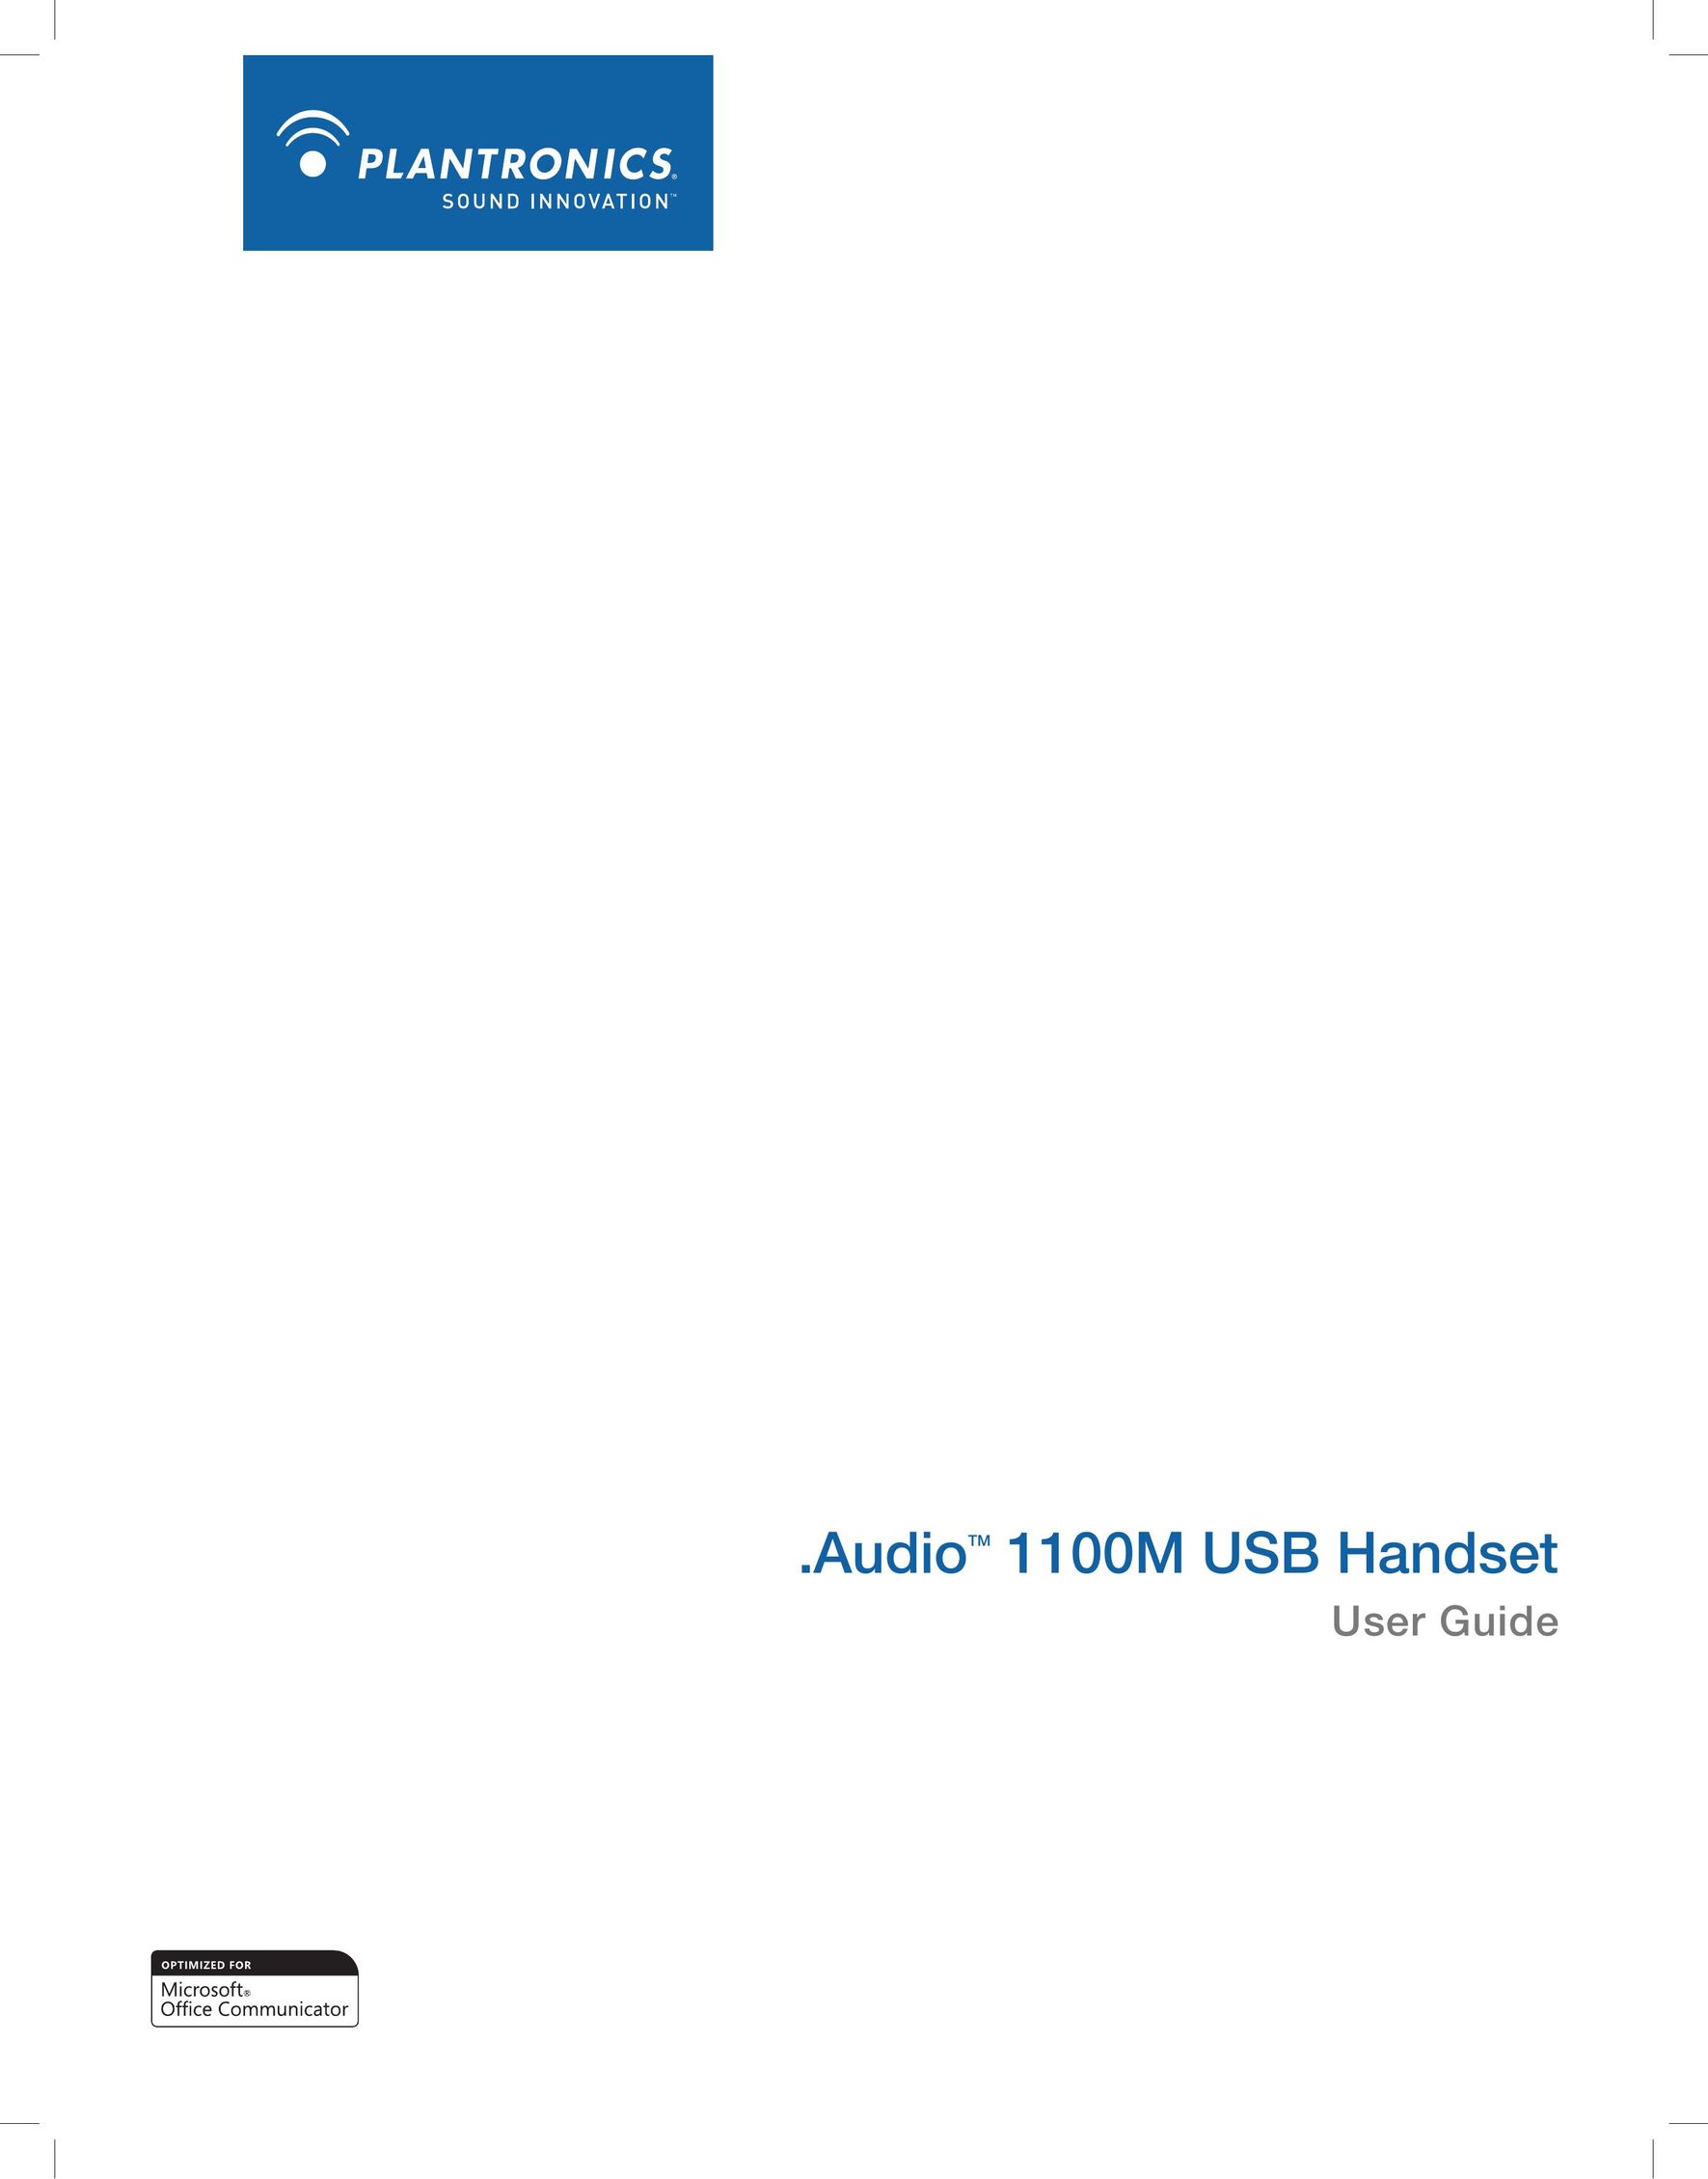 Plantronics Audio 1100M Headphones User Manual